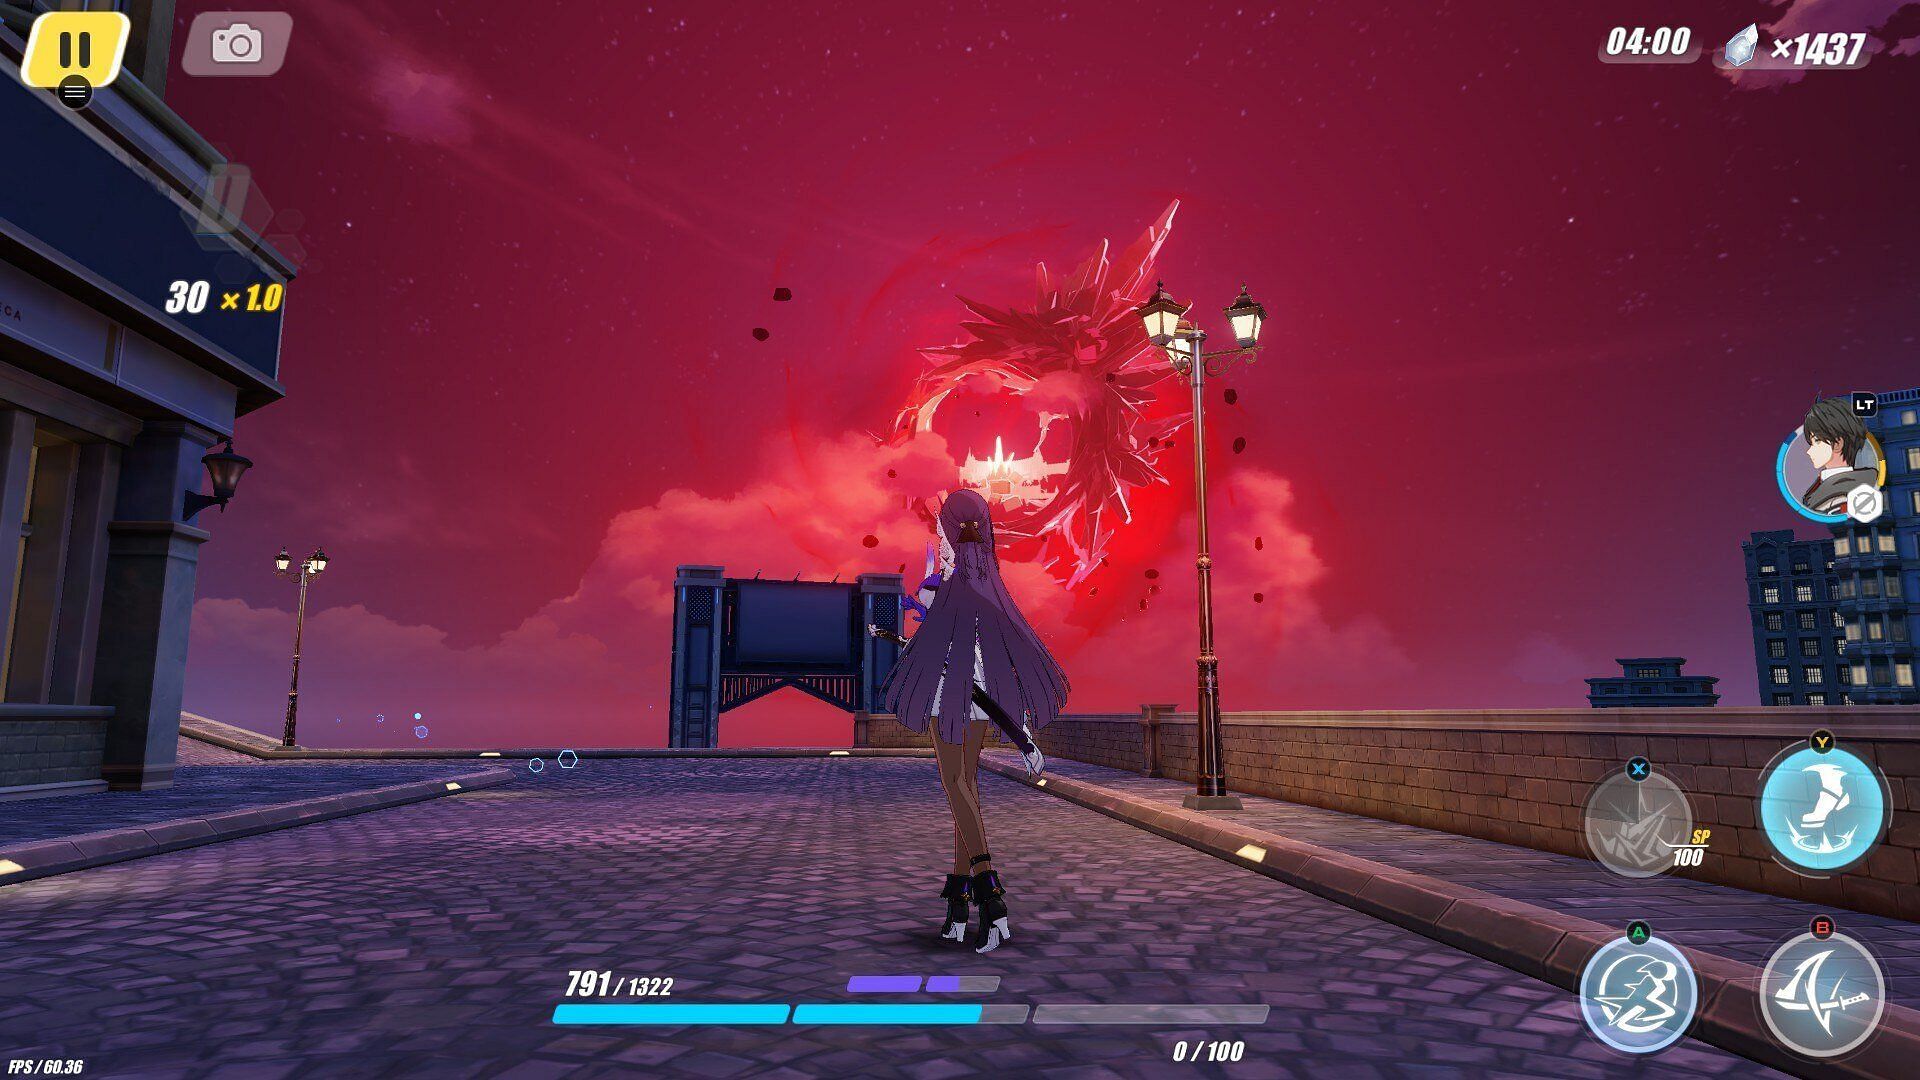 Honkai Impact 3rd is one of the many games like Genshin Impact (Image via Hoyoverse)